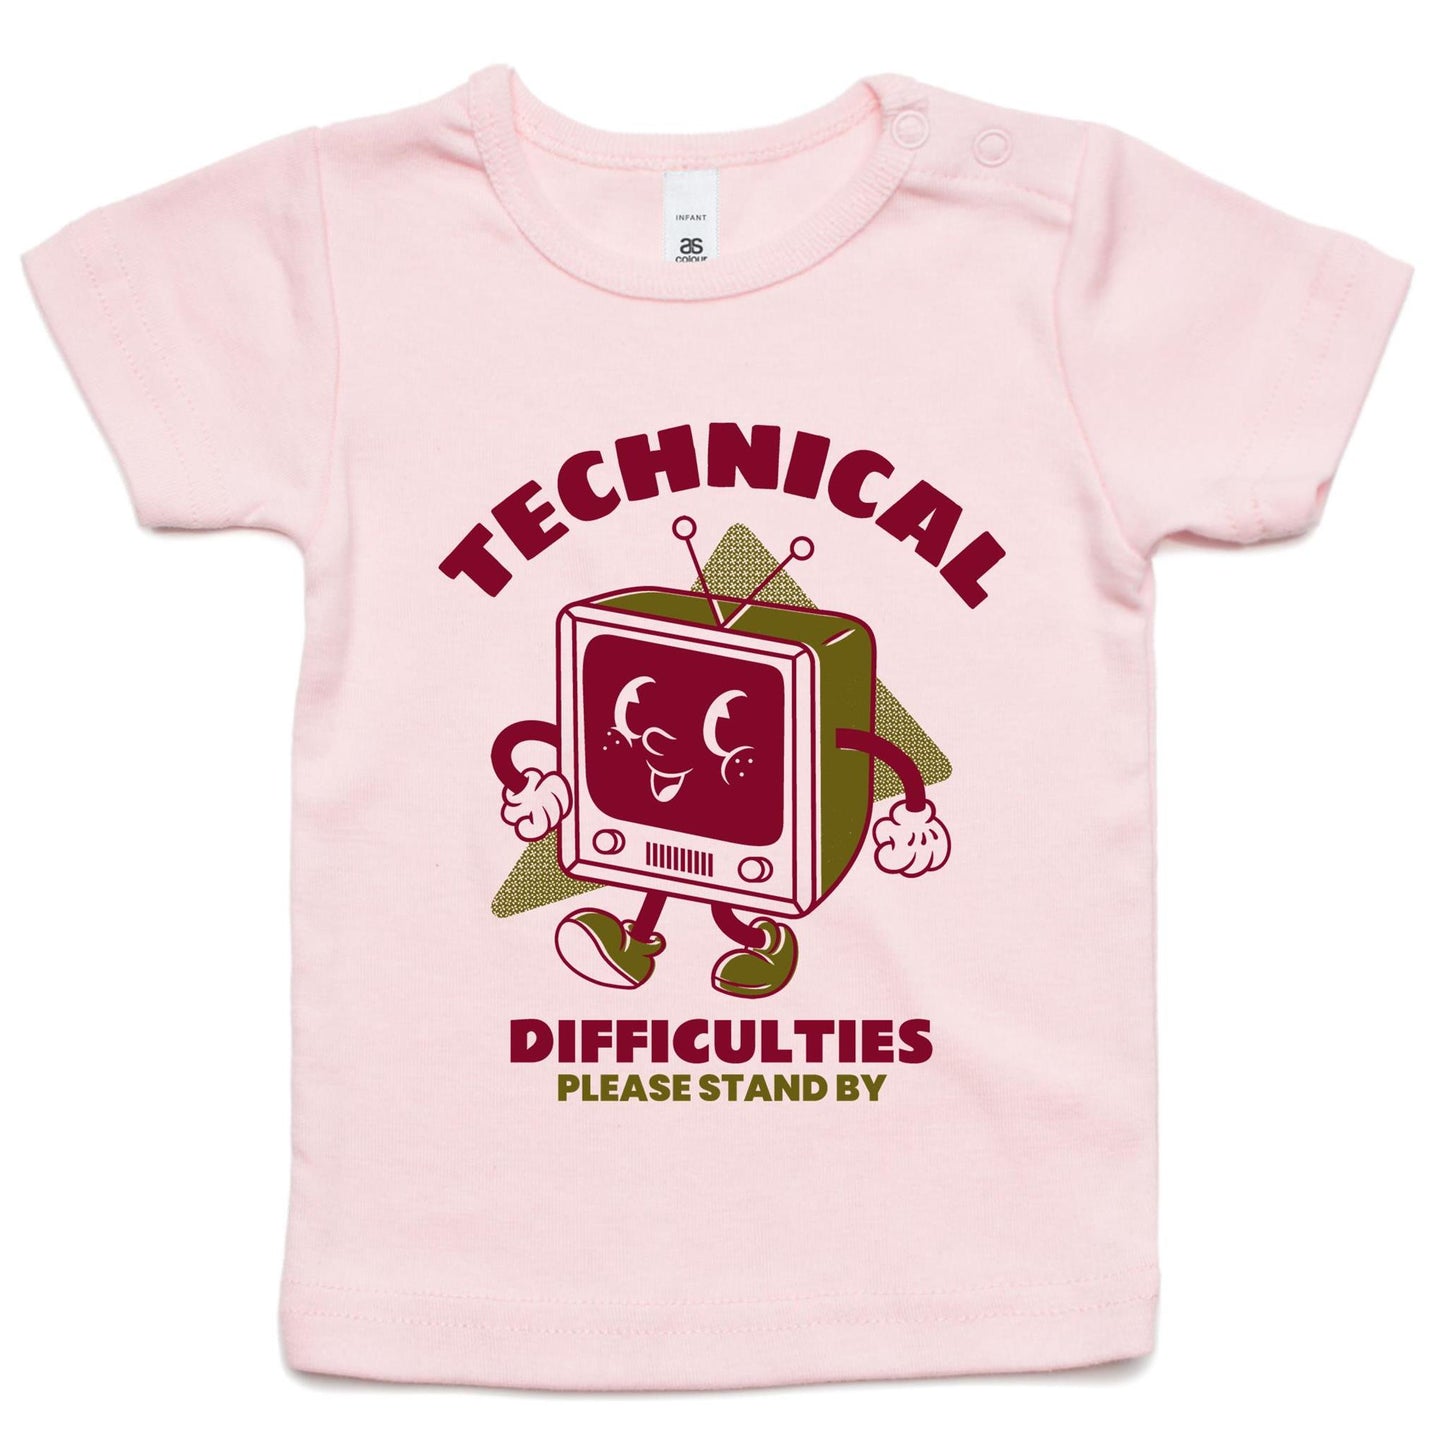 Retro TV Technical Difficulties - Baby T-shirt Pink Baby T-shirt Retro Tech